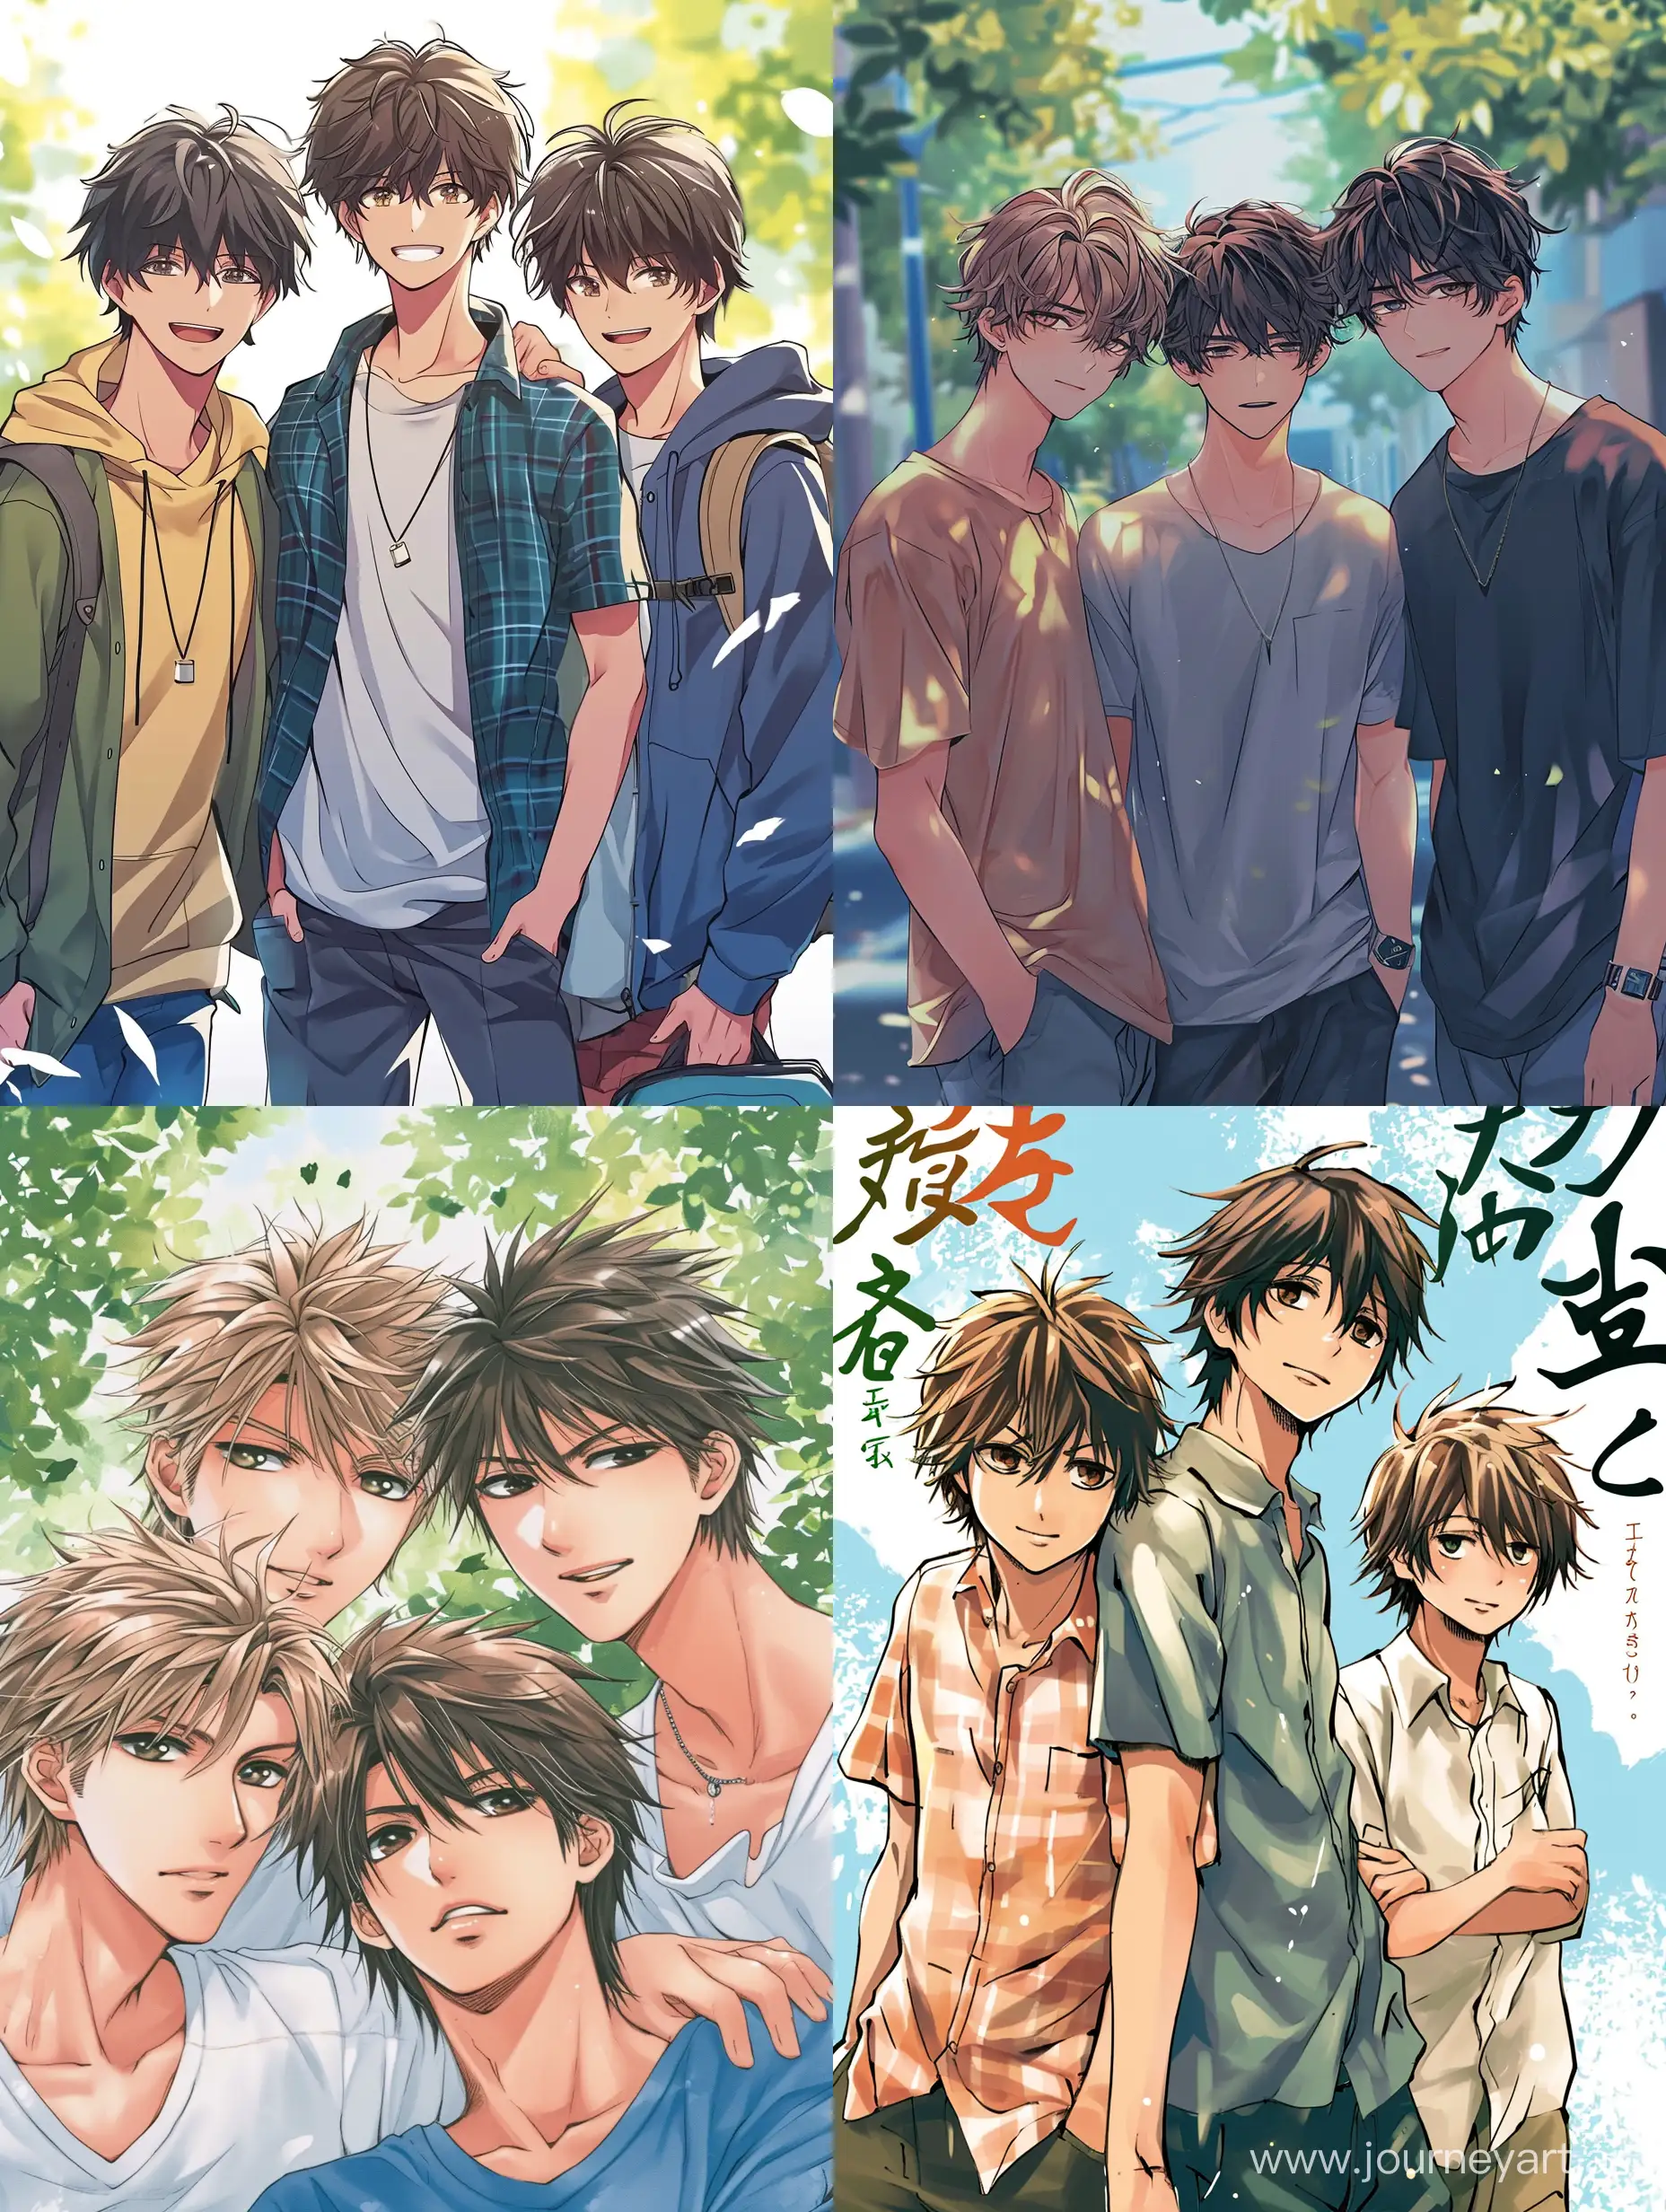 Anime style, three boys, frinedship, the cover for Light novel. 